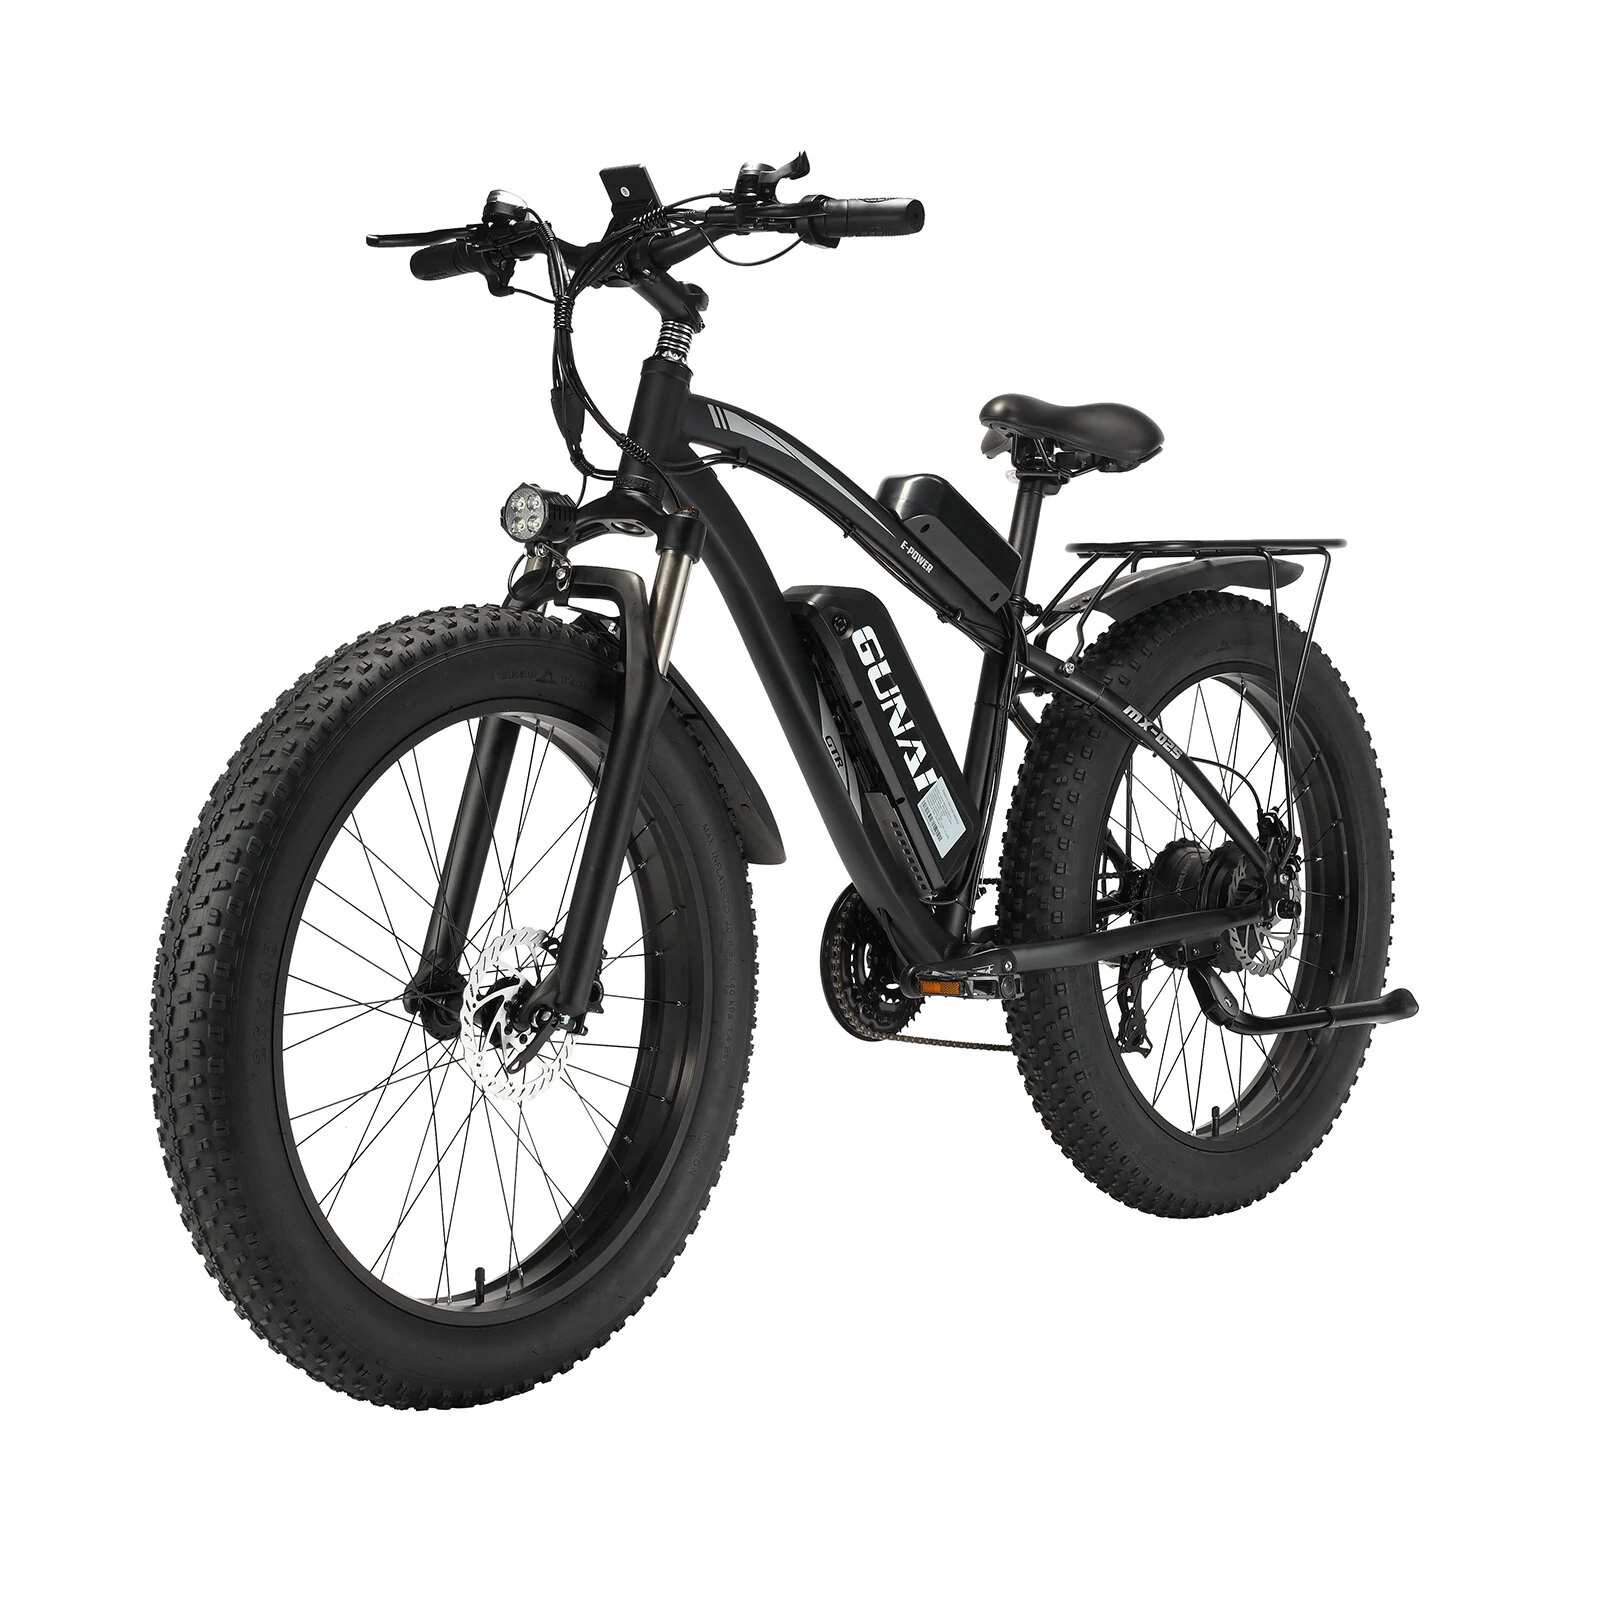 SHENGMILO MX02S Electric Bike Banggood Coupon Promo Code (CZ Warehouse)